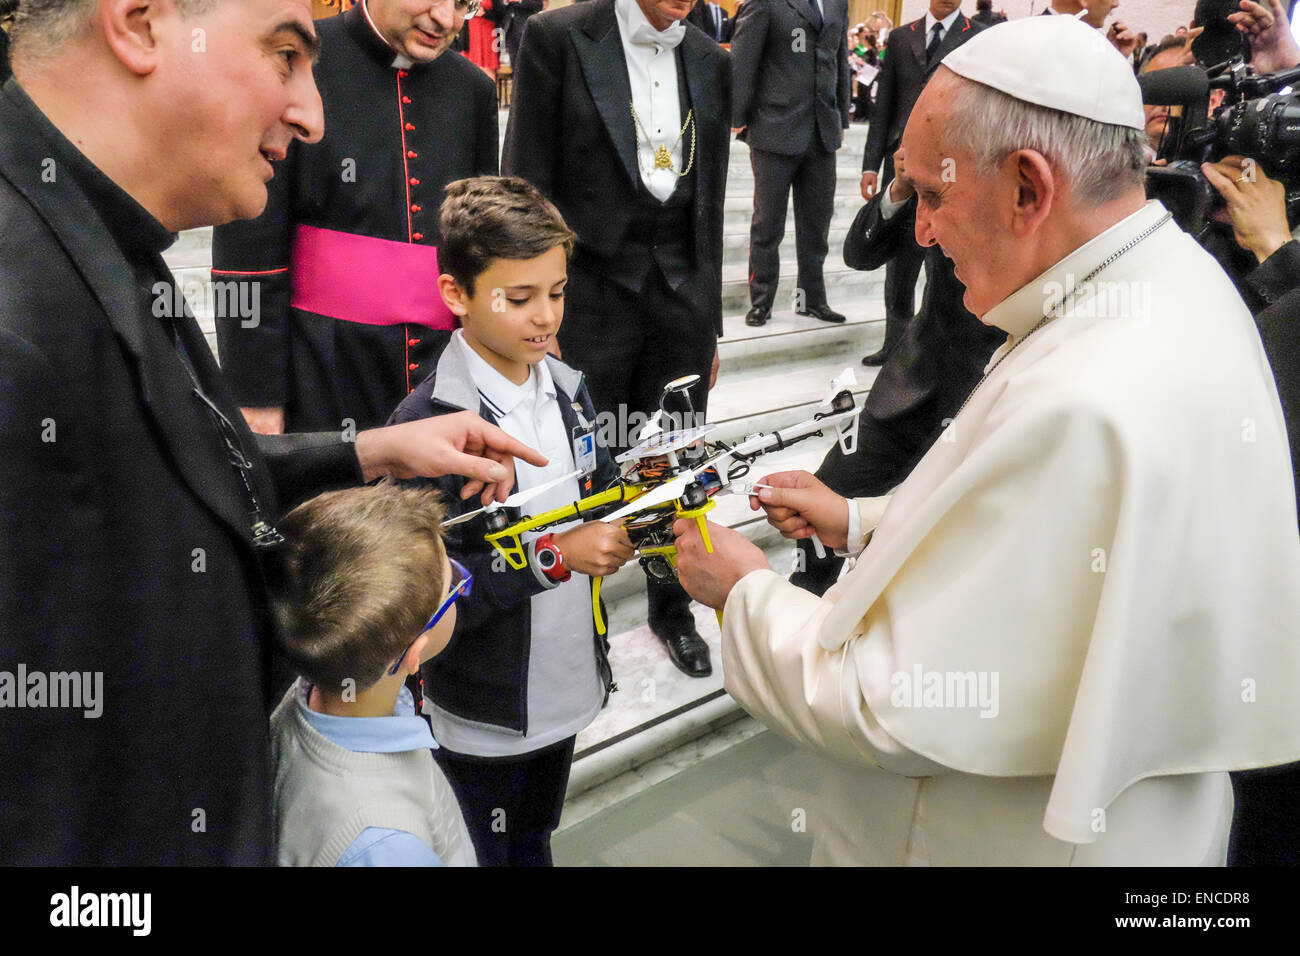 Vatikan. 30. April 2015. Ein Kind Geschenk an Papst Francis eine Drohne Publikum im Saal Nervi, Vatikan 30. April 2015 Credit: wirklich Easy Star/Alamy Live News Stockfoto